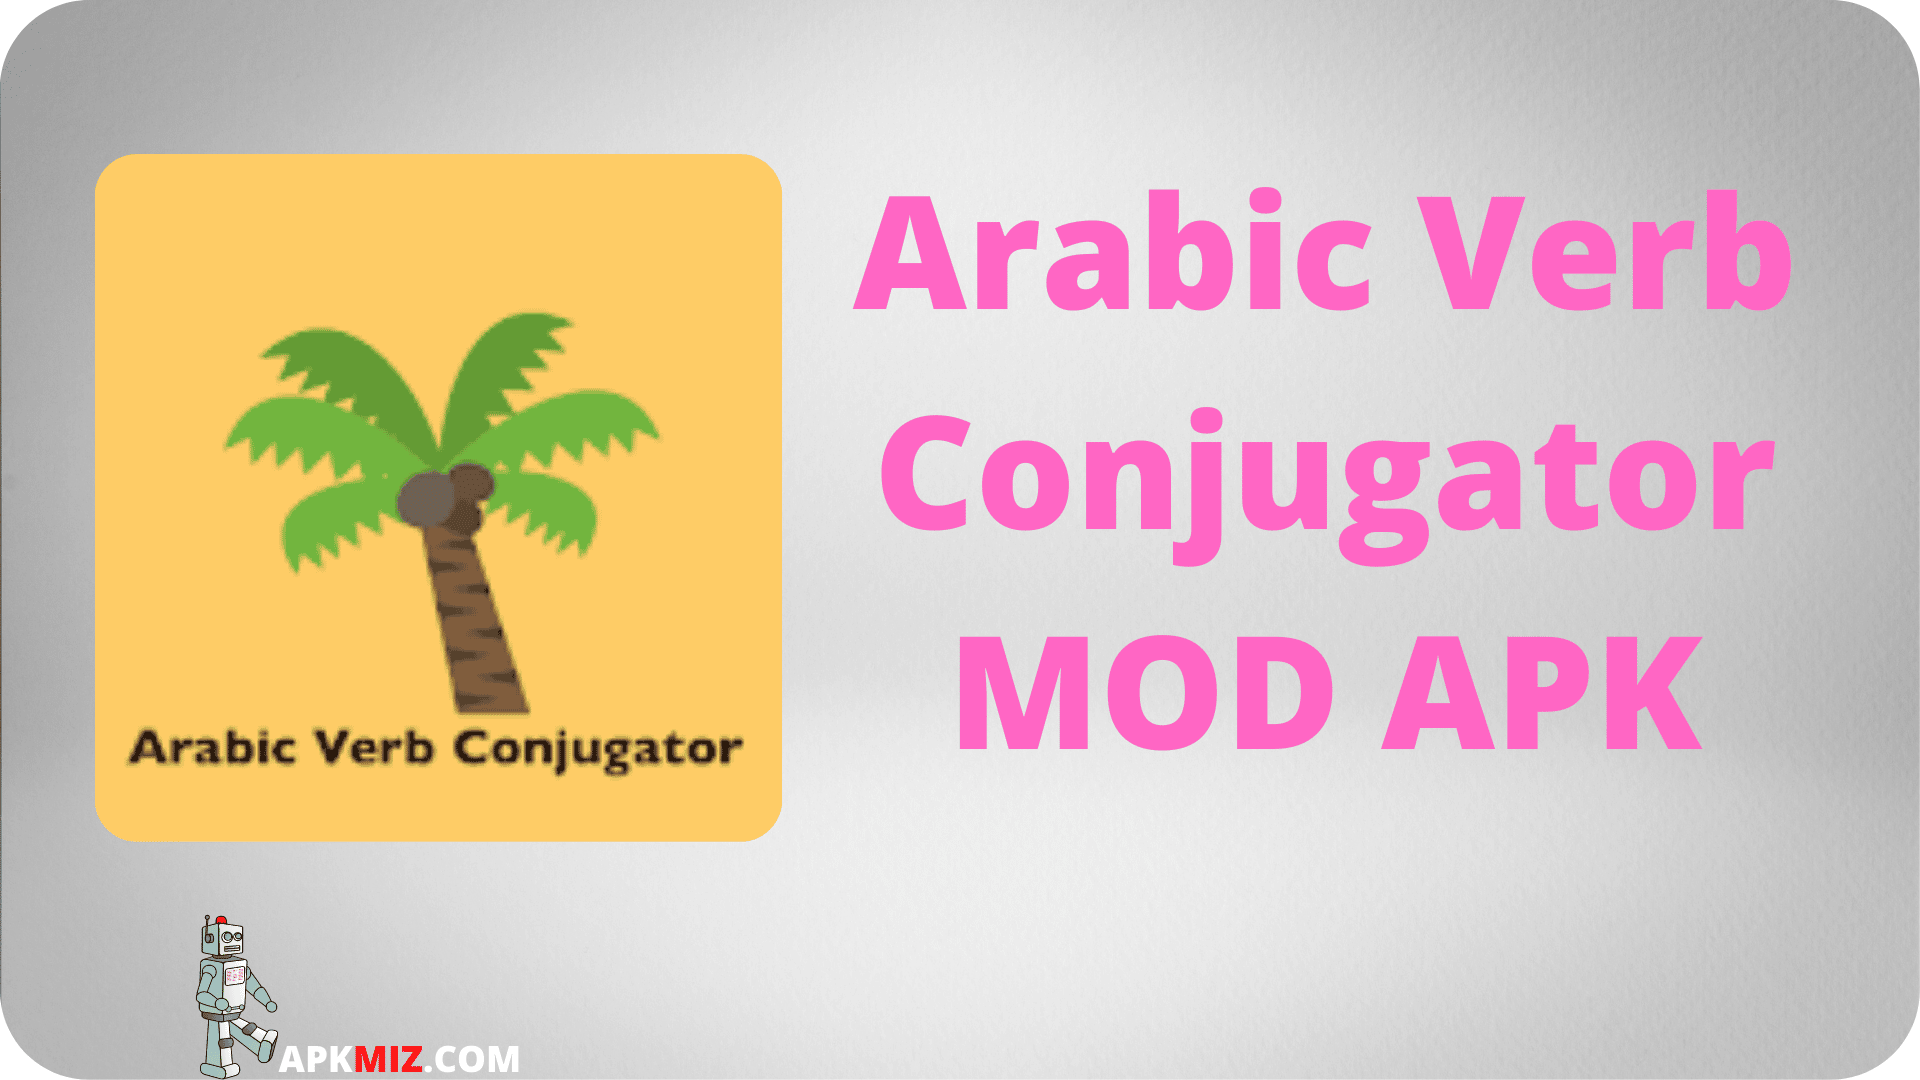 Arabic Verb Conjugator Mod Apk